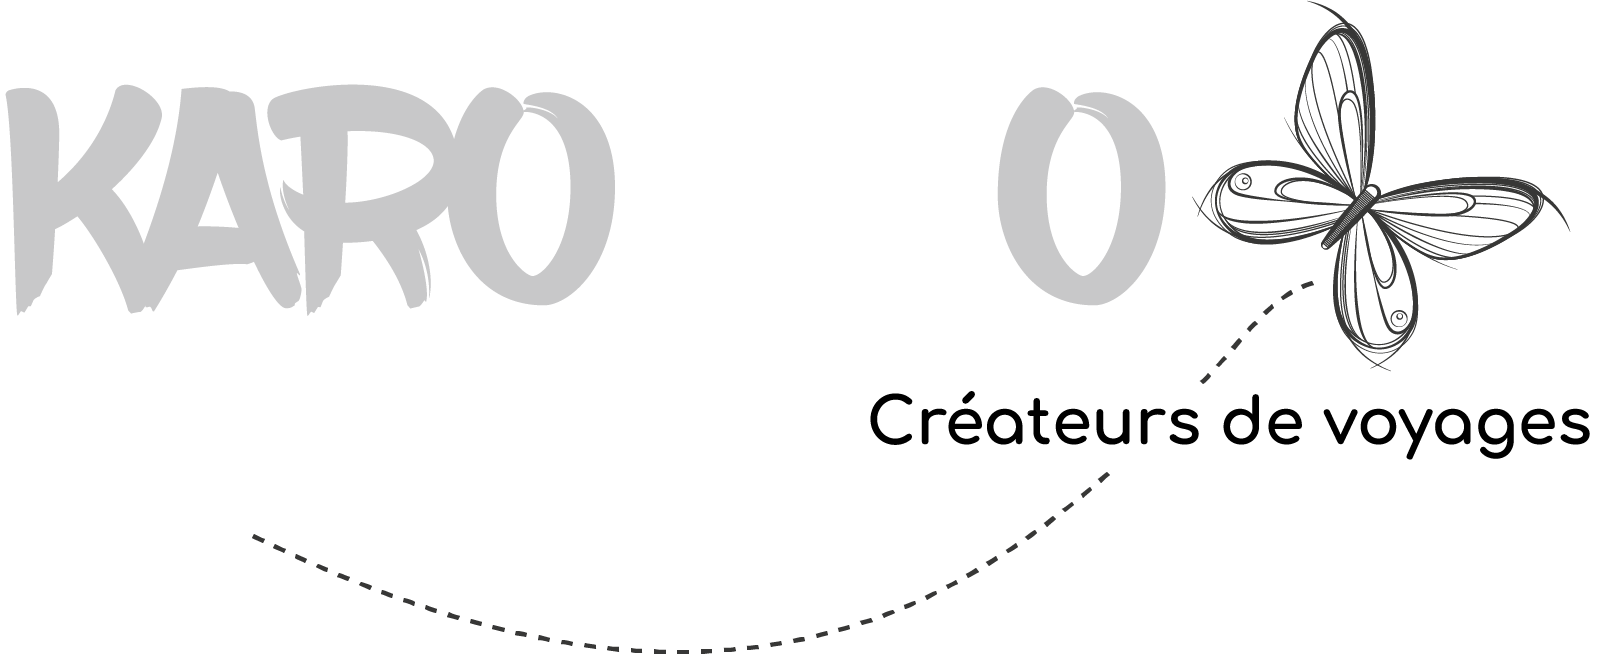 Karolelo Tours